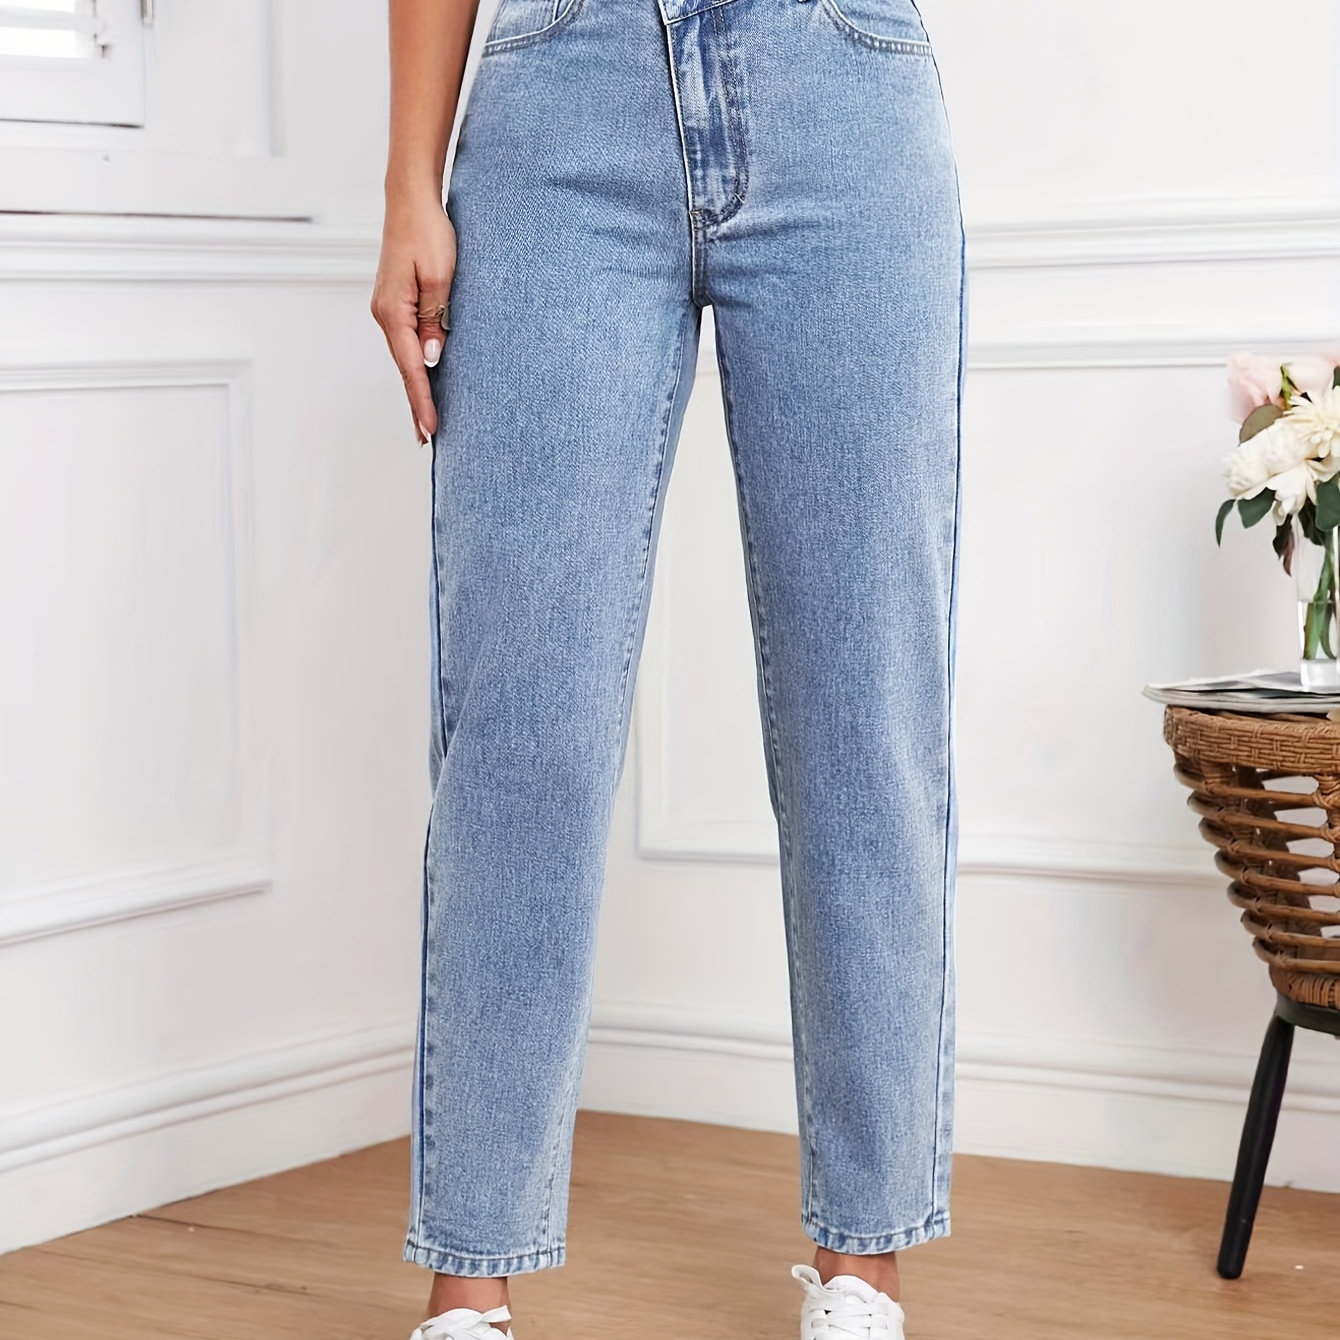 

Women's Casual High-waisted Jeans, Stepped Waist Straight-leg Denim Pants, Plain Light Wash - Fashionable Streetwear Style